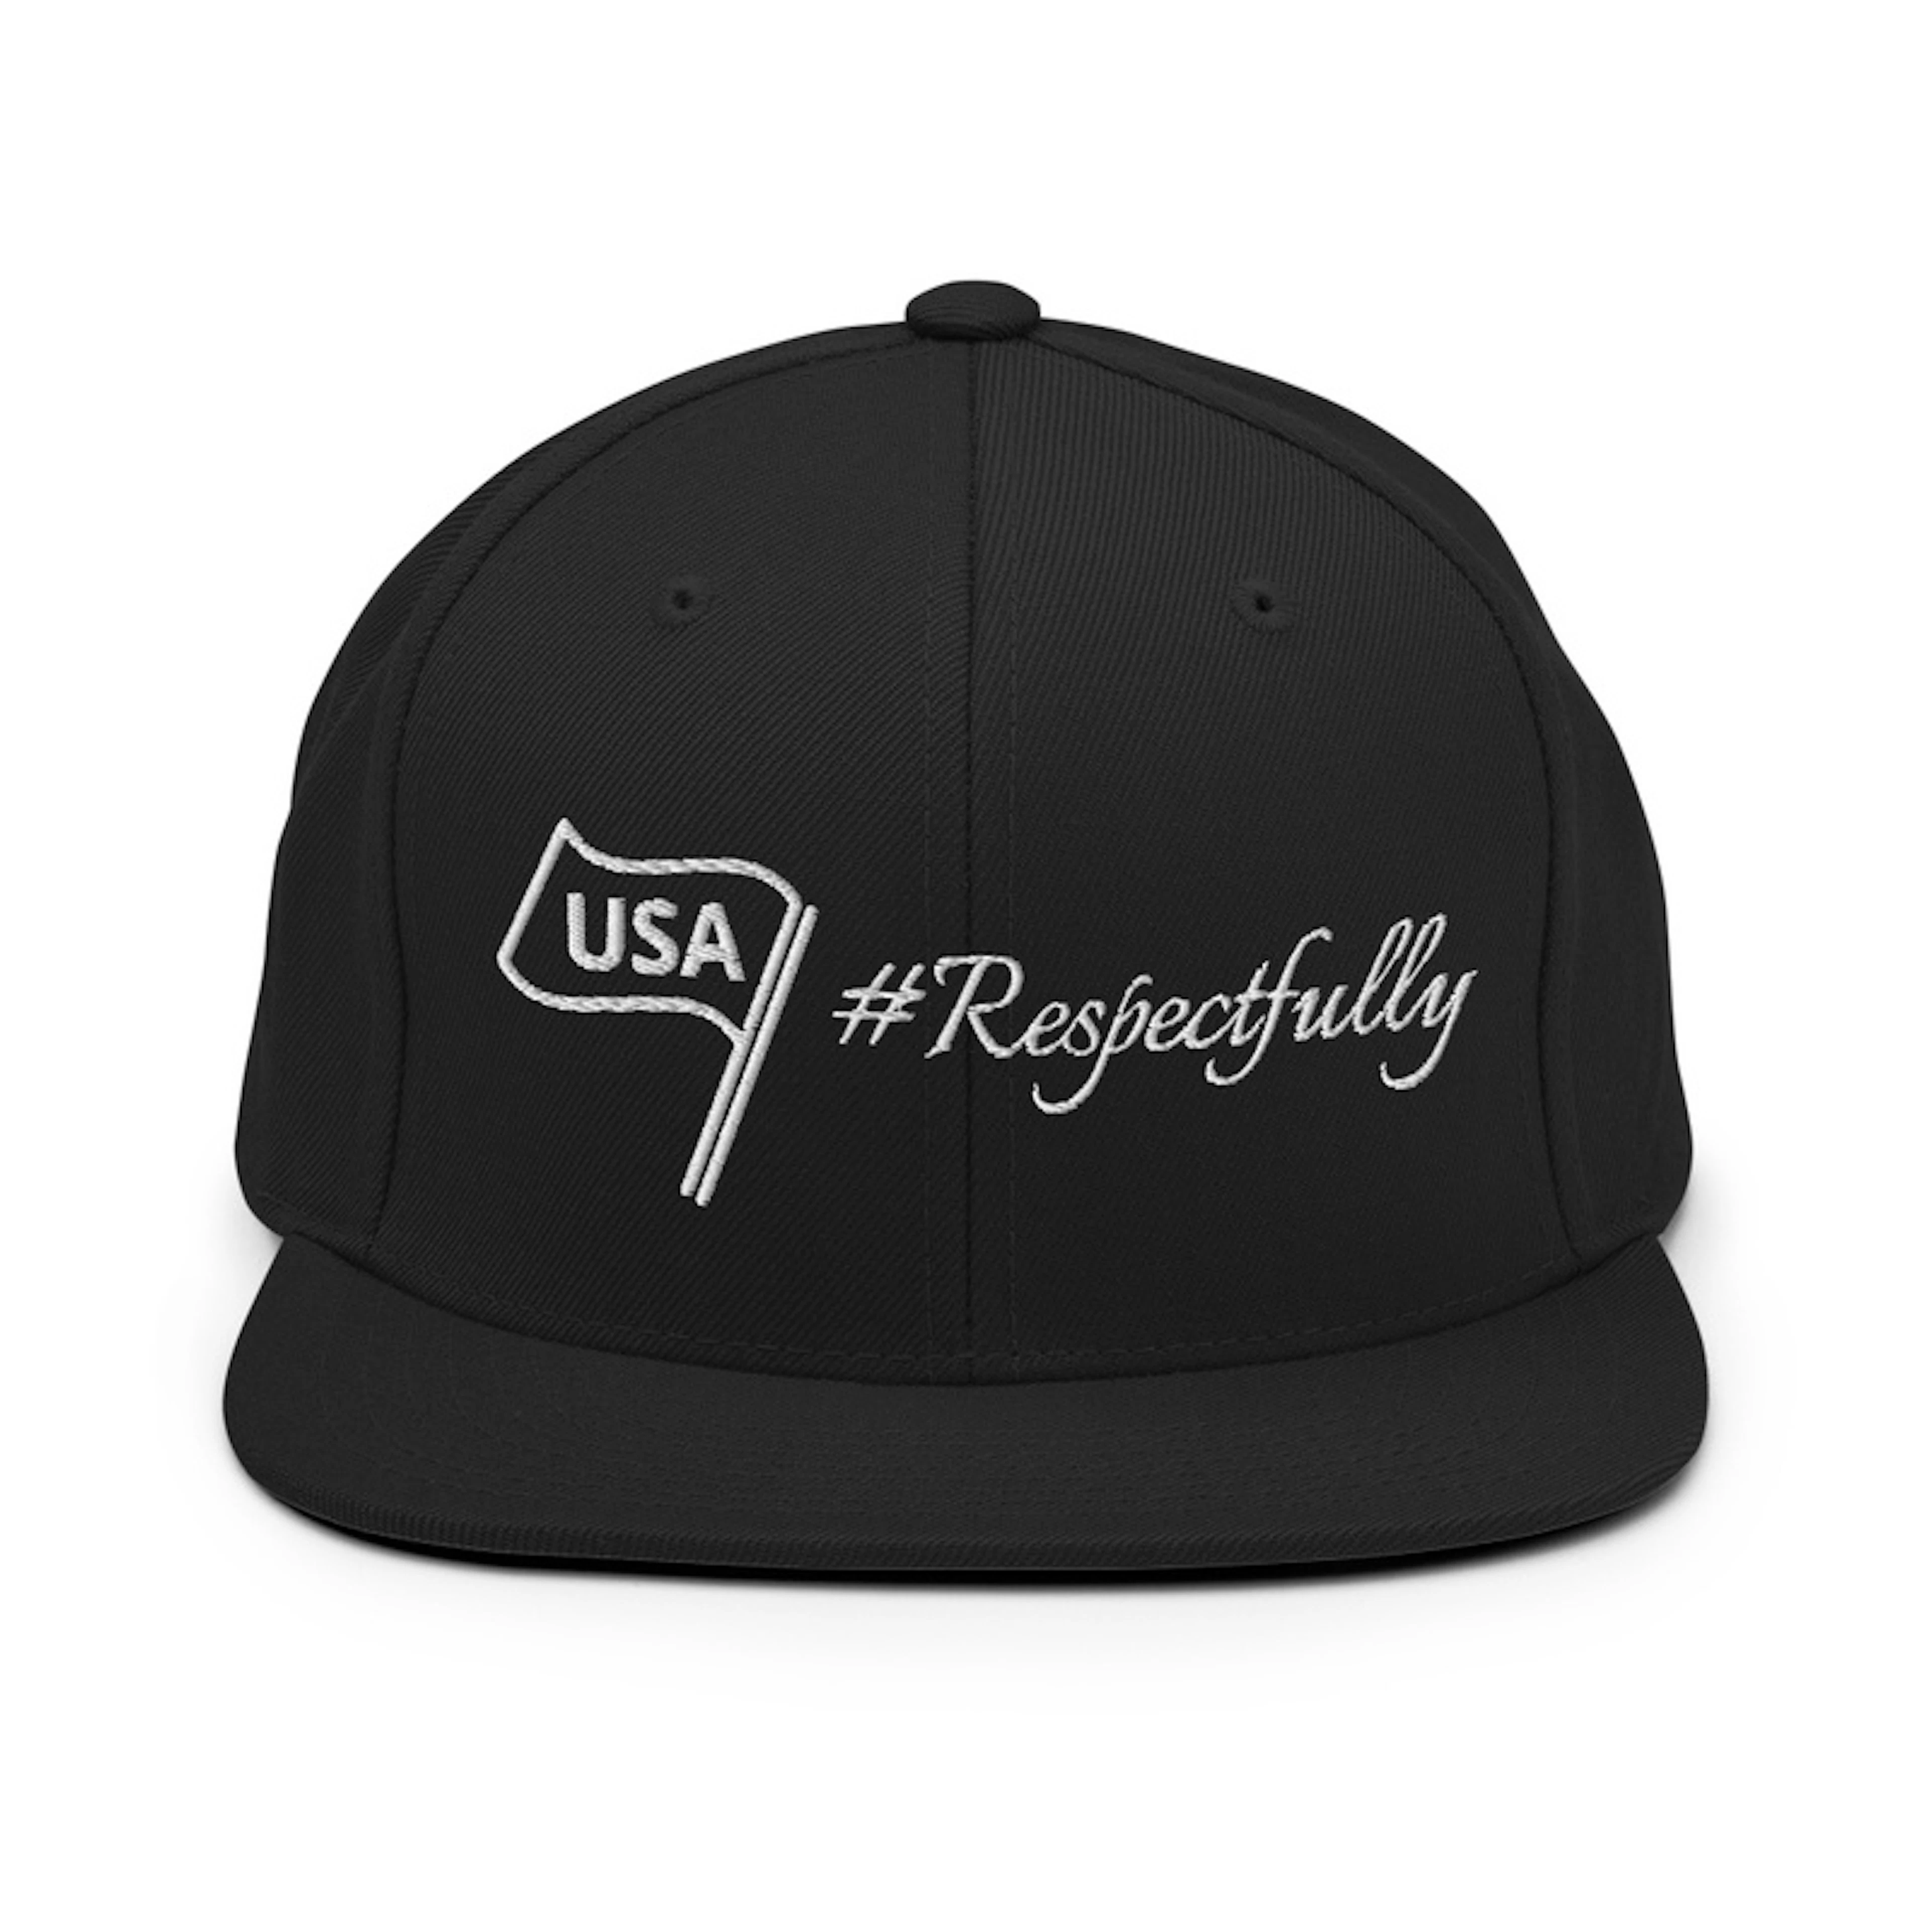 RespectfullyUSA HAT